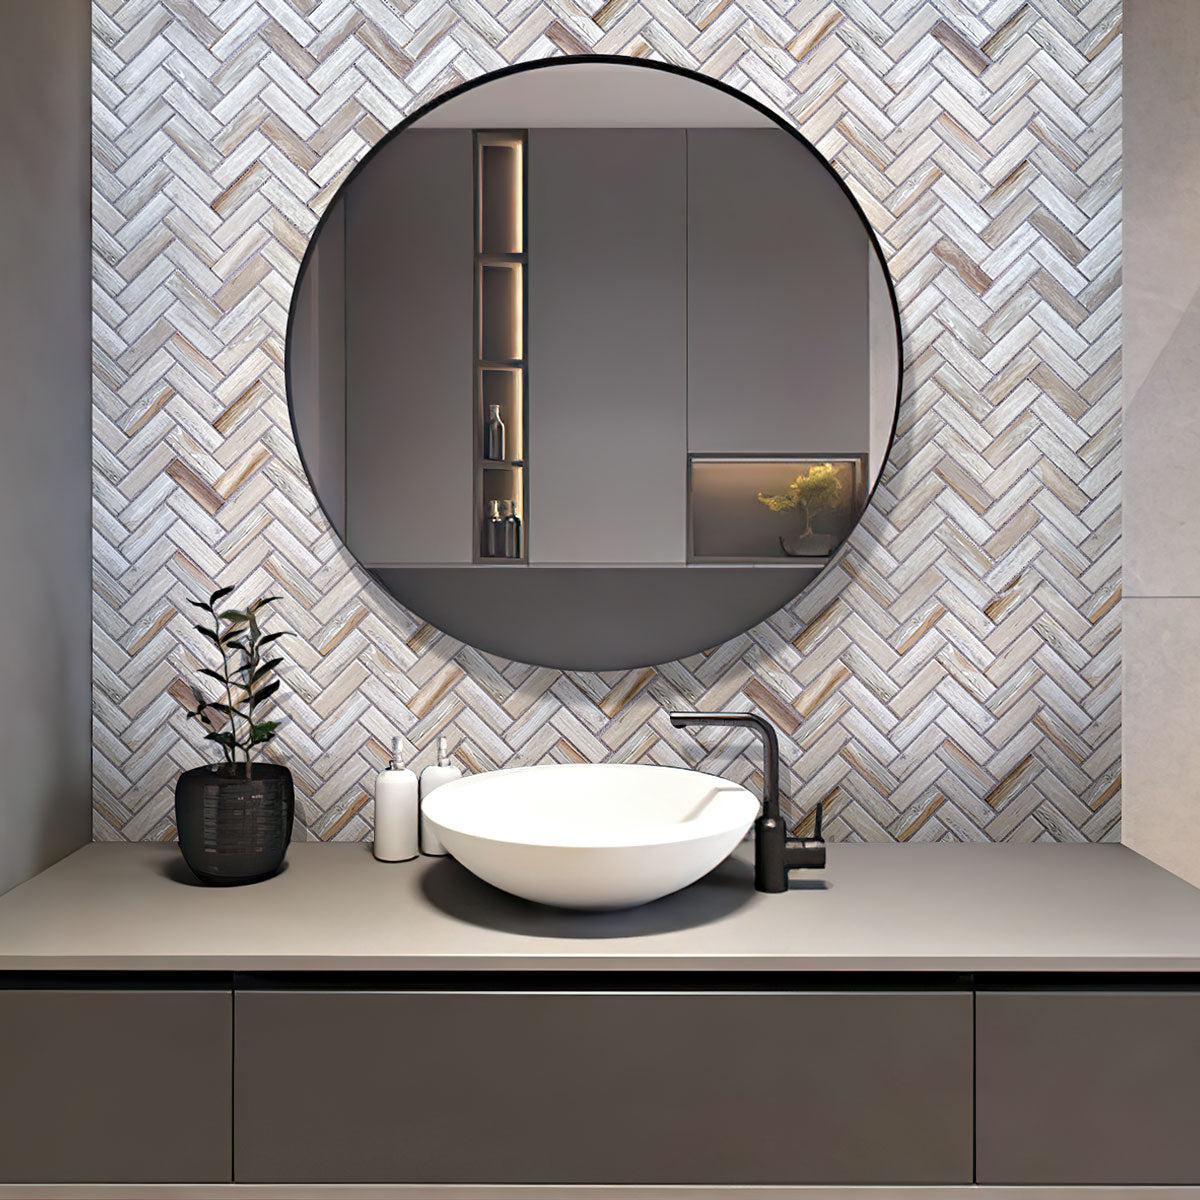 11" x 12.6" Recycled Glass Herringbone Mosaic In Wood Color bathroom backsplash